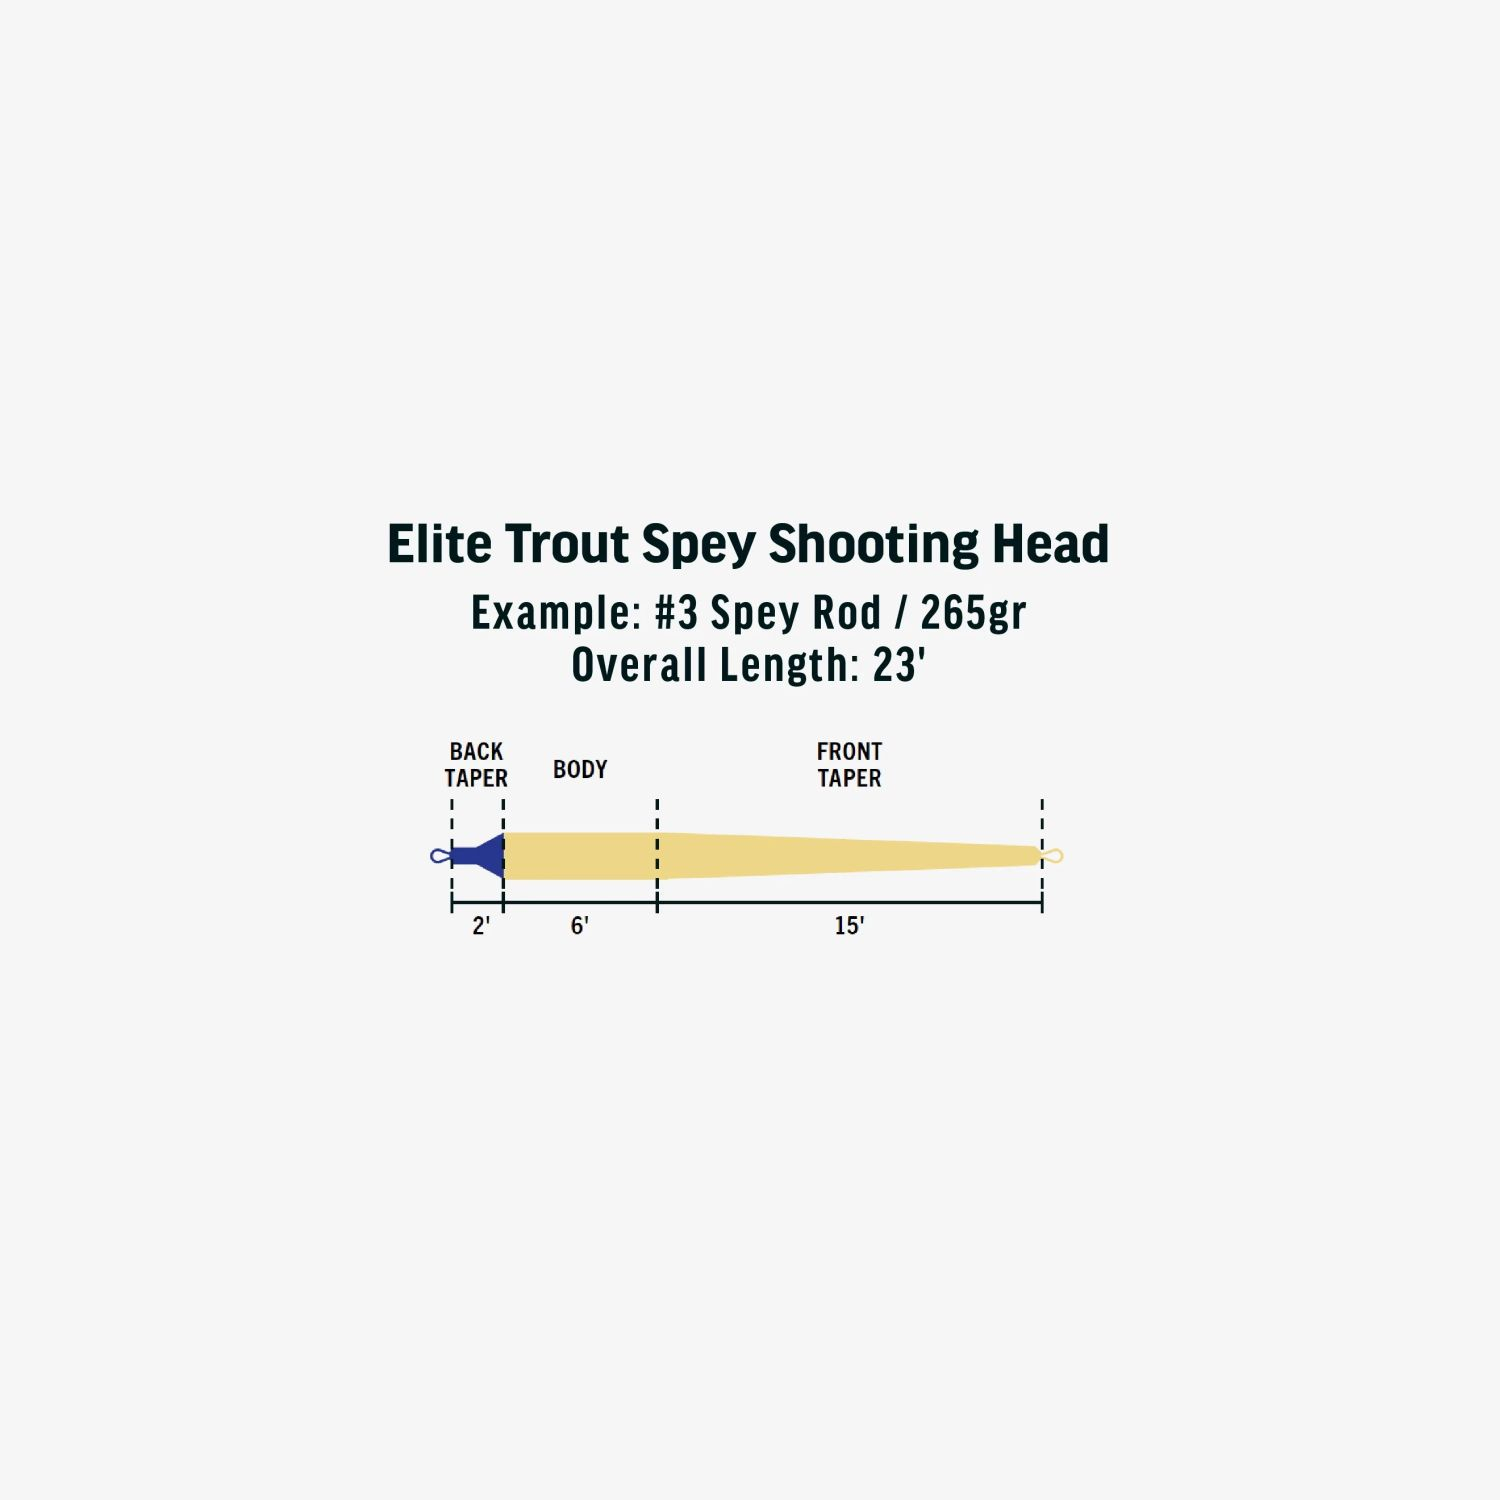 Elite Trout Spey Shooting Head